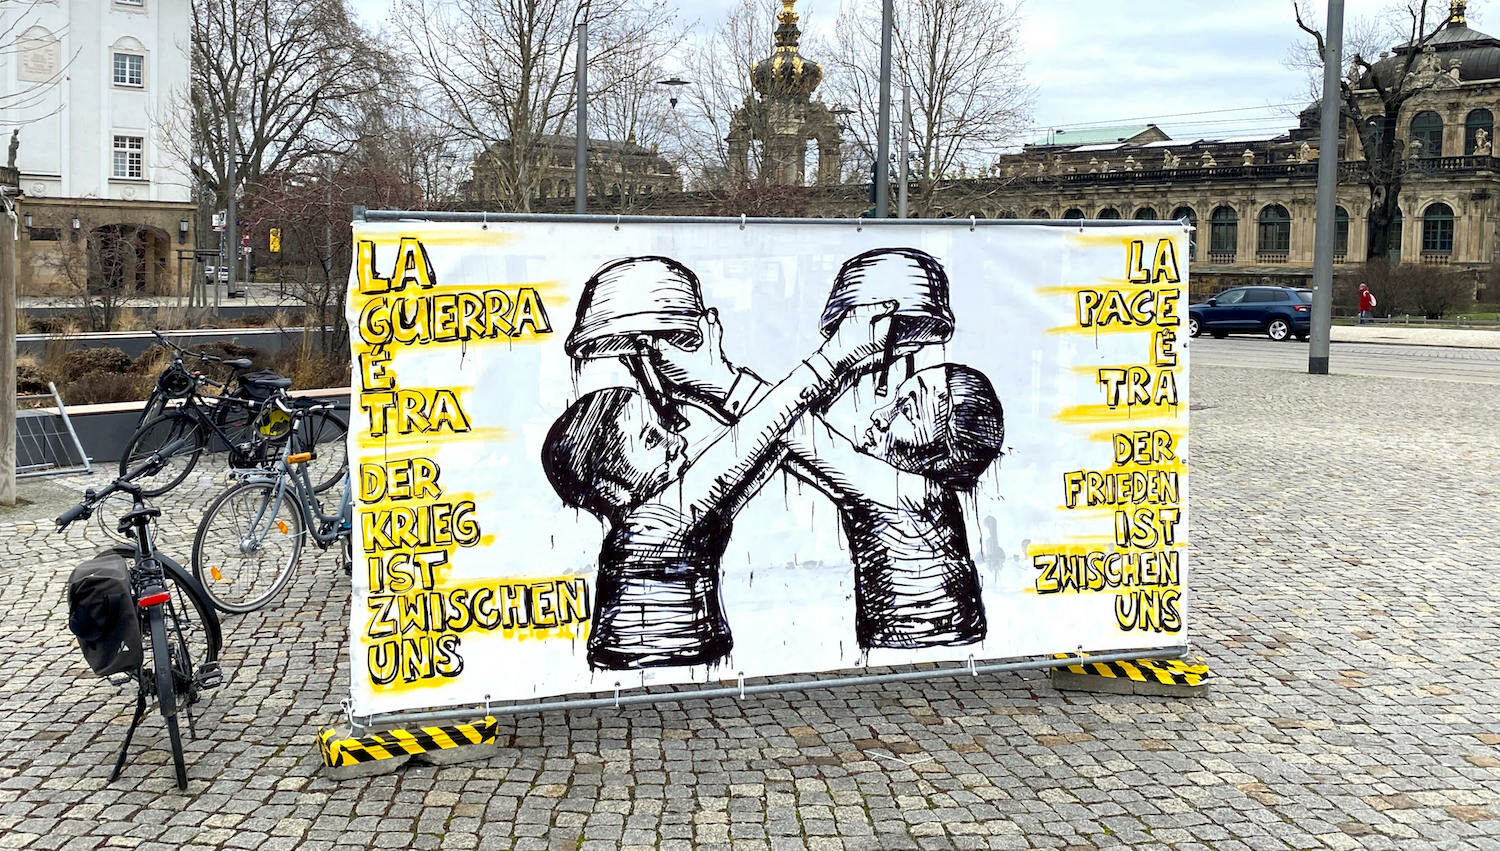 Plakatgestaltung von Collettivo FX - La Guerra e tra - la Pace etra für WOD Dresdn 2022